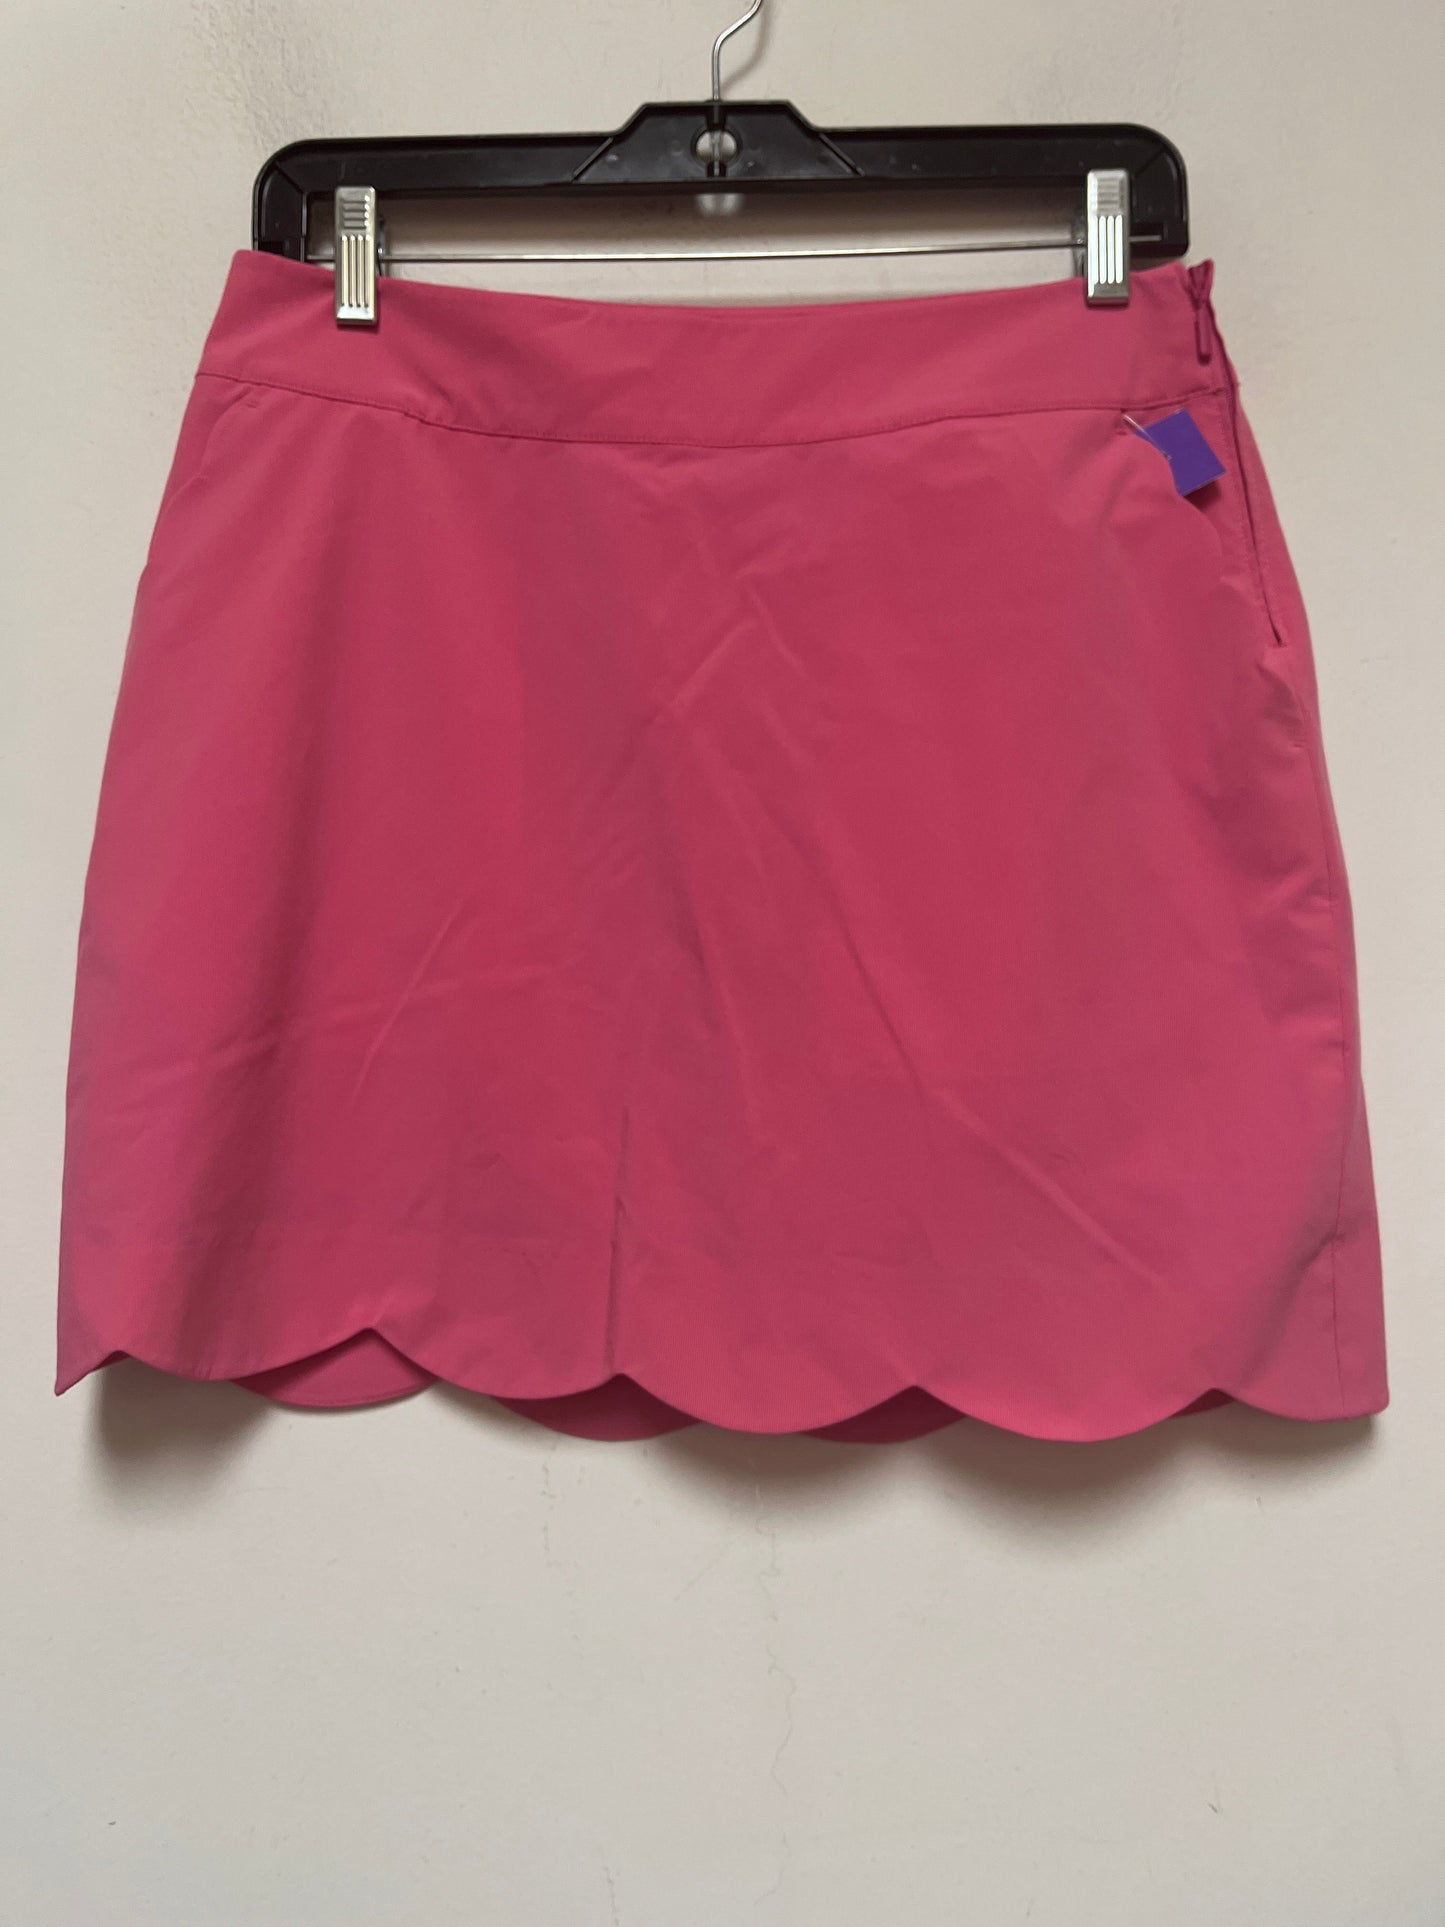 Pink Skirt Mini & Short Vineyard Vines, Size 6